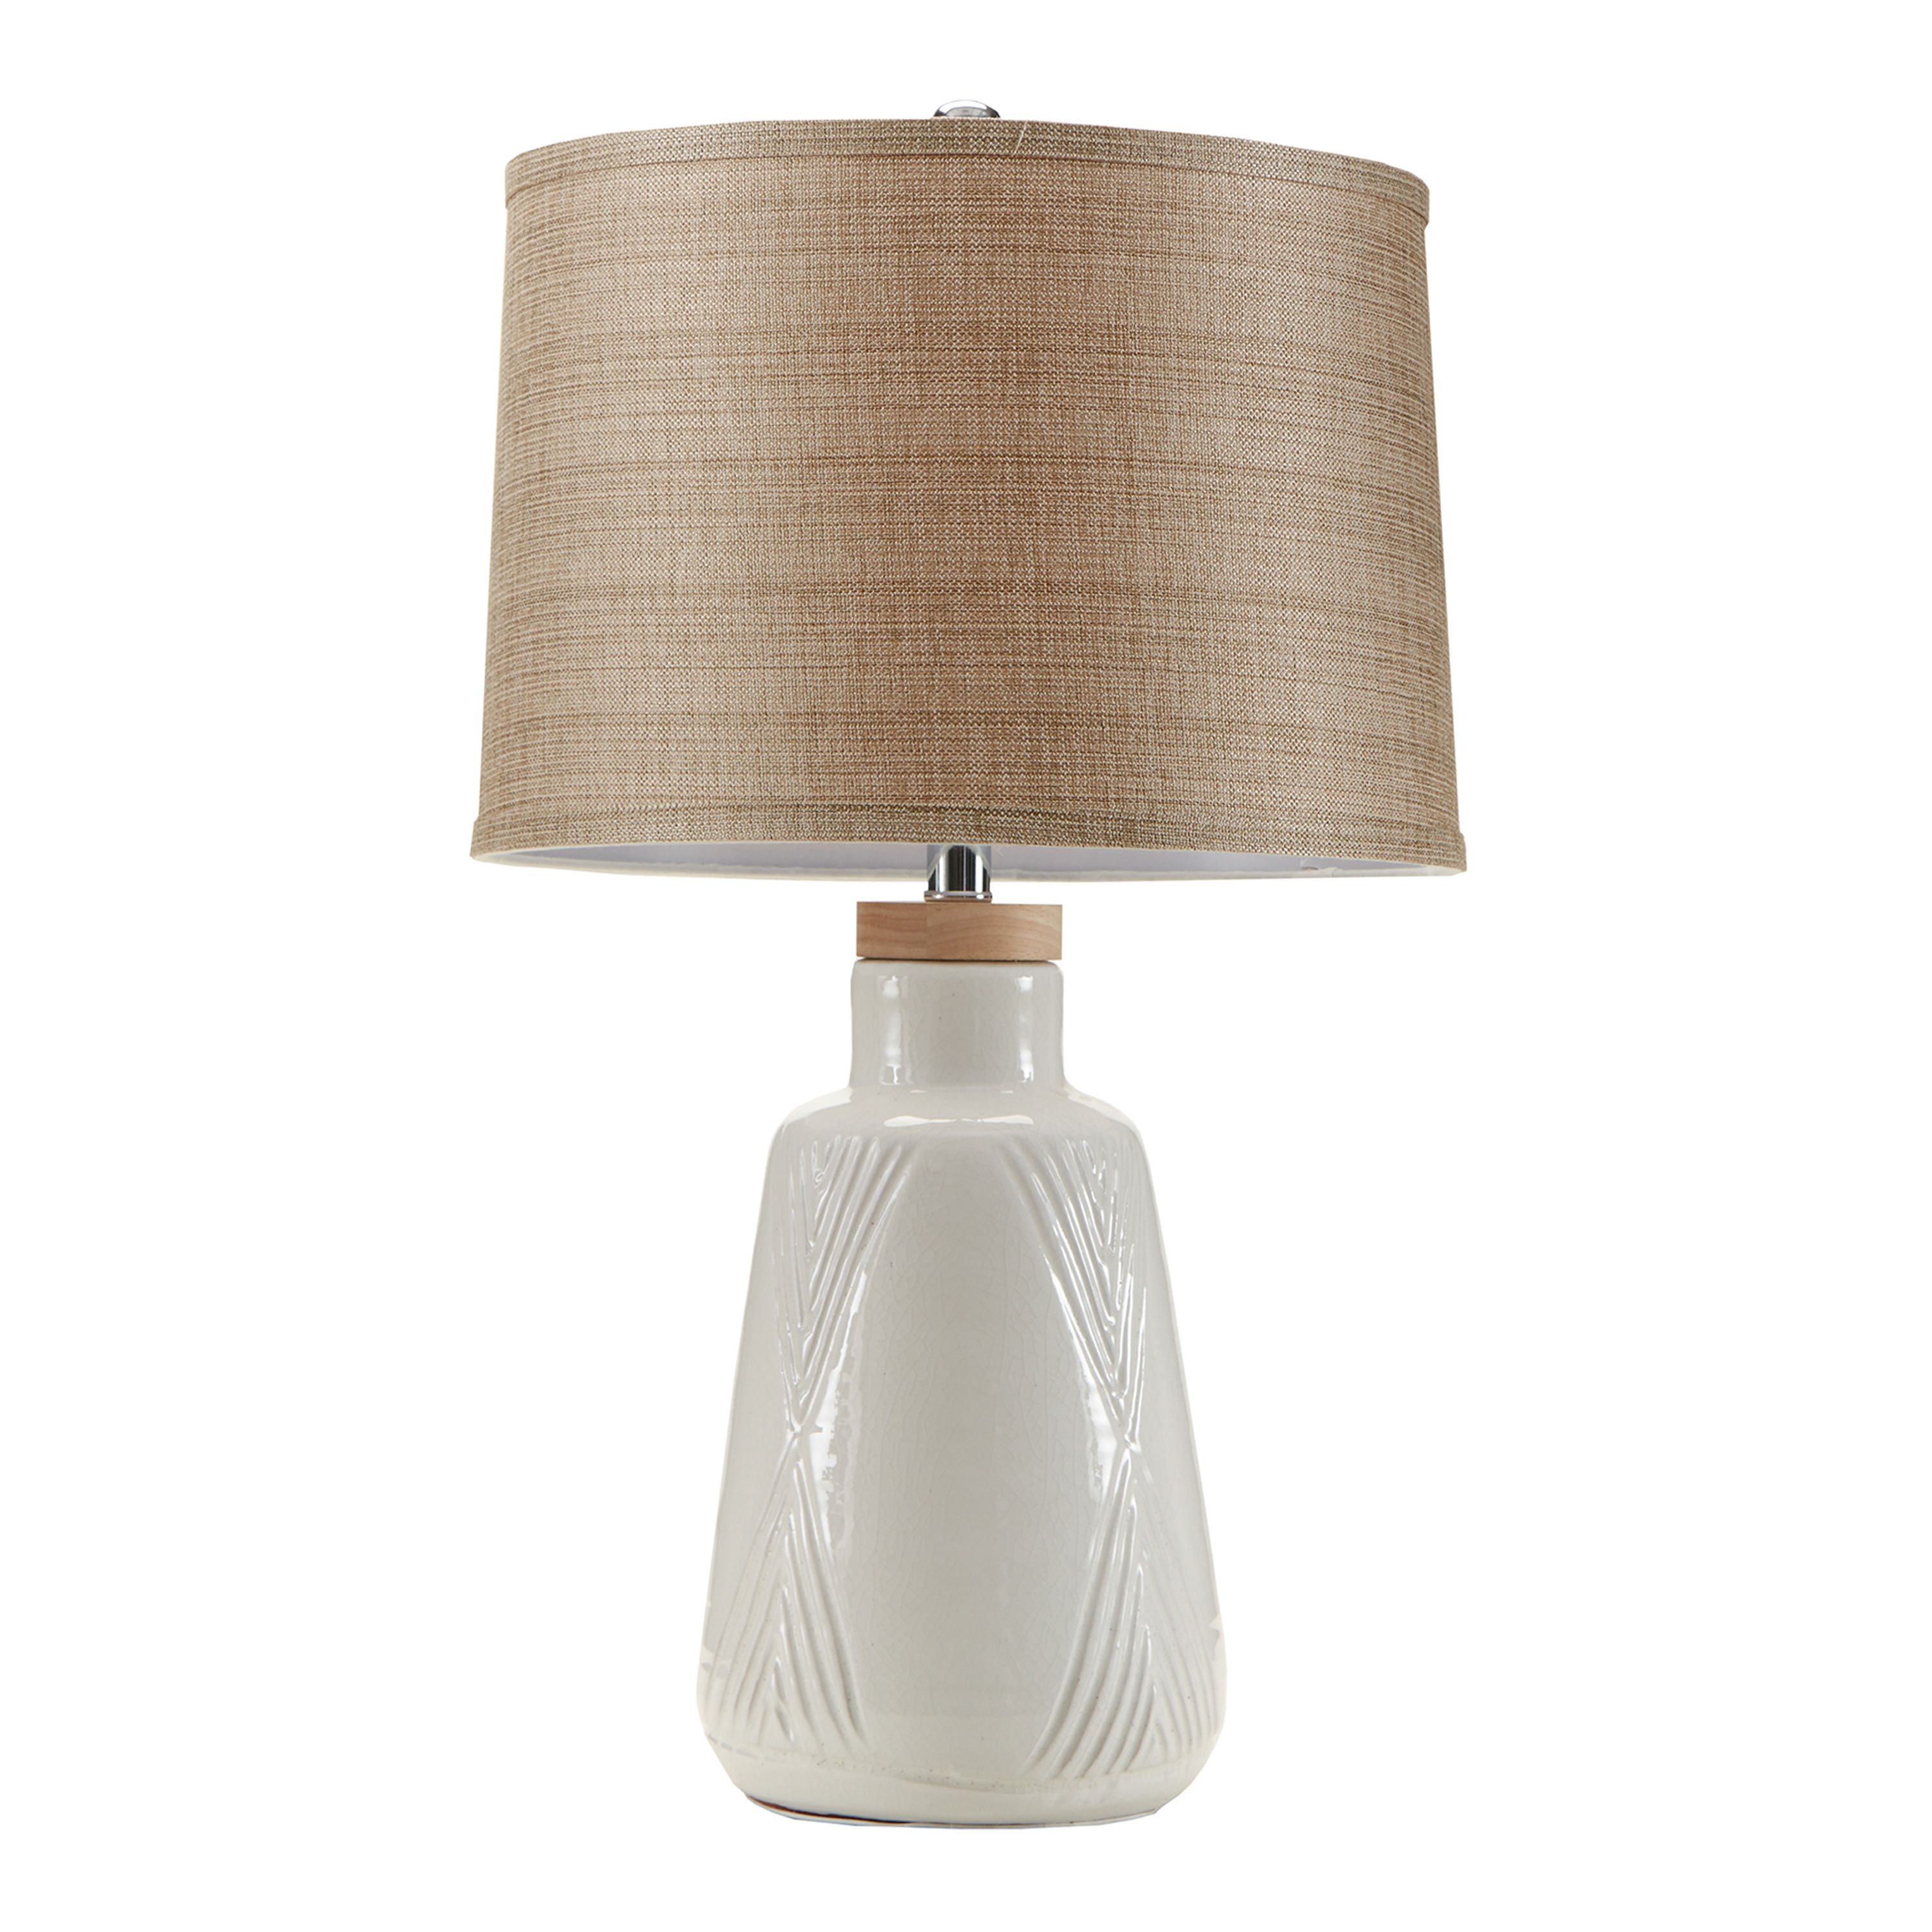 KT Ivory Ceramic Table Lamp | World Market